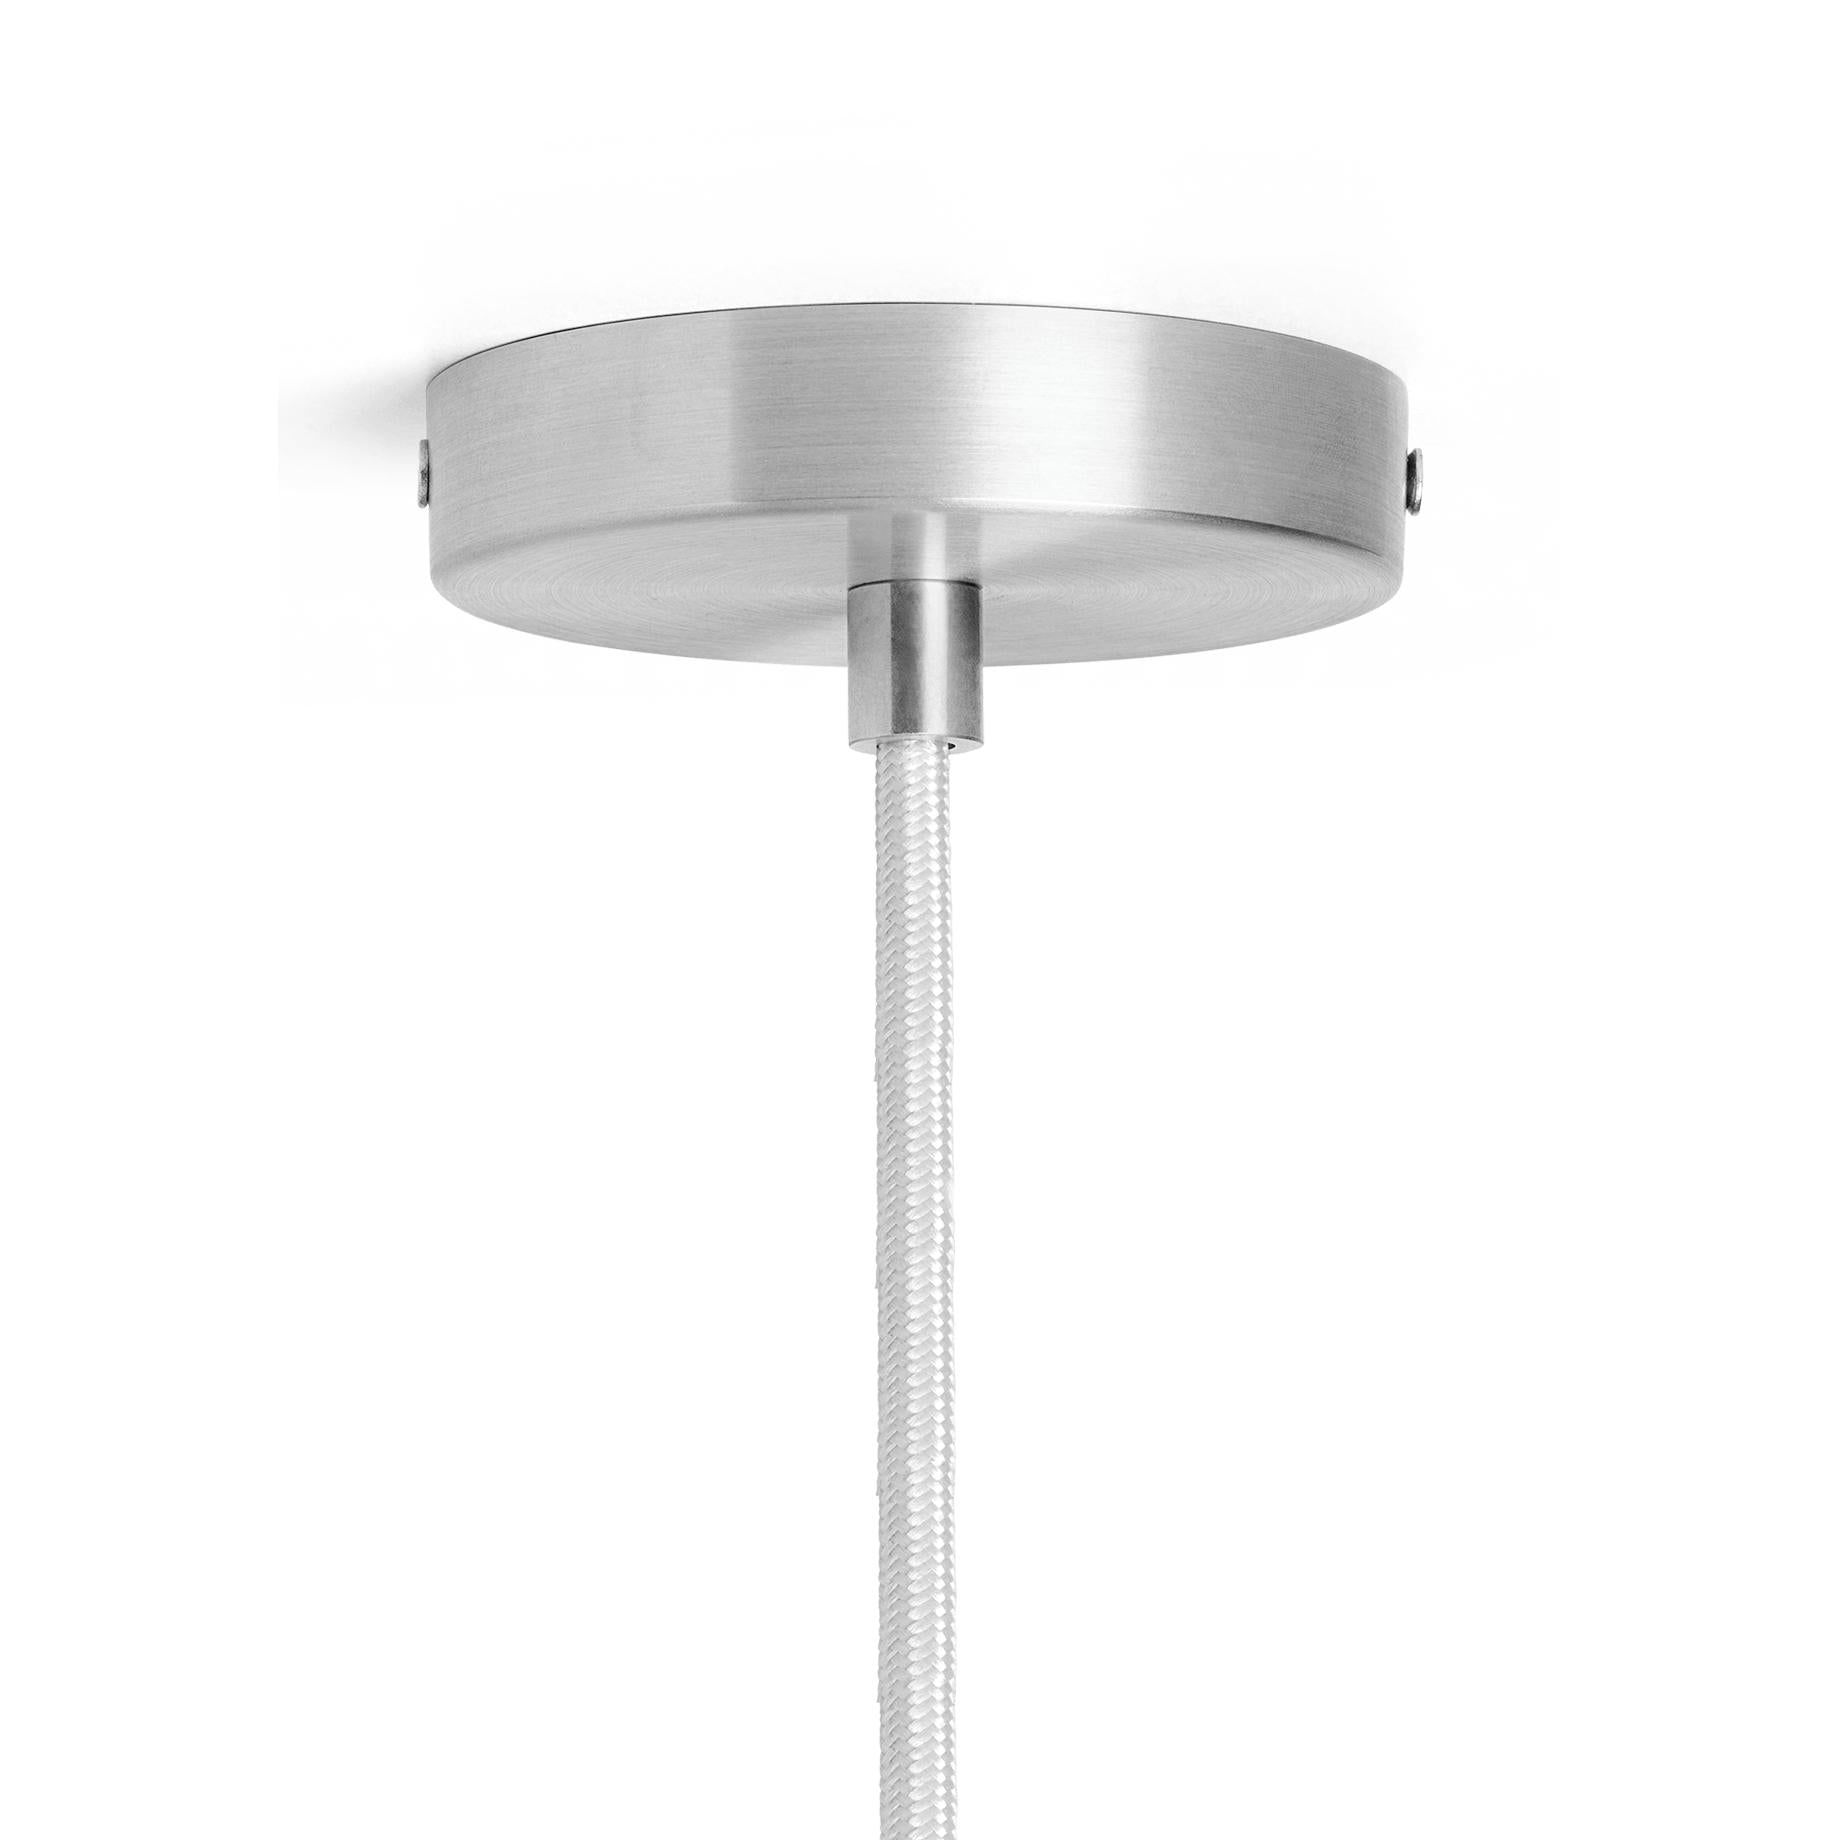 Ferm Living Vuelta Suspension Lamp Stainless Steel ø60 Cm, White